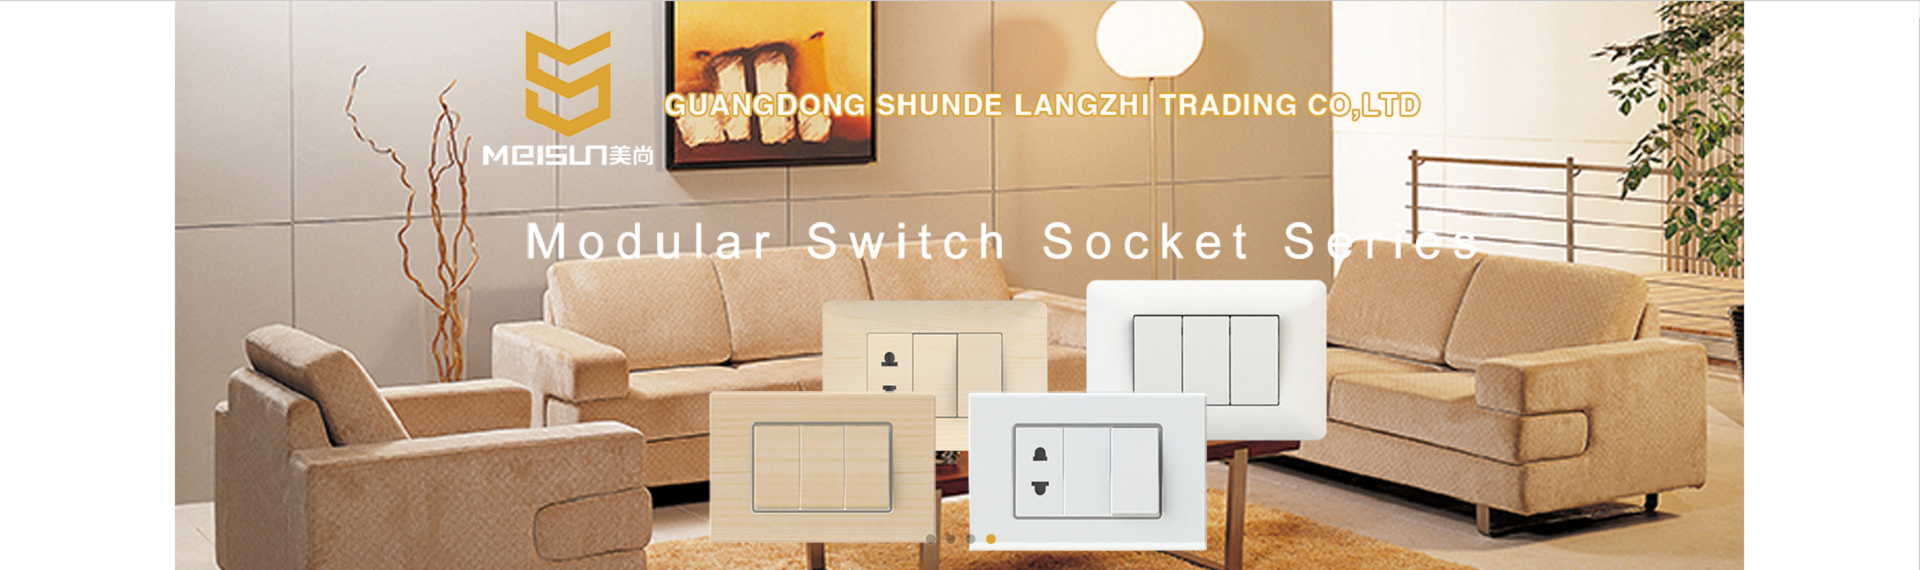 Guangdong Shunde Langzhi Trading CO., Ltd